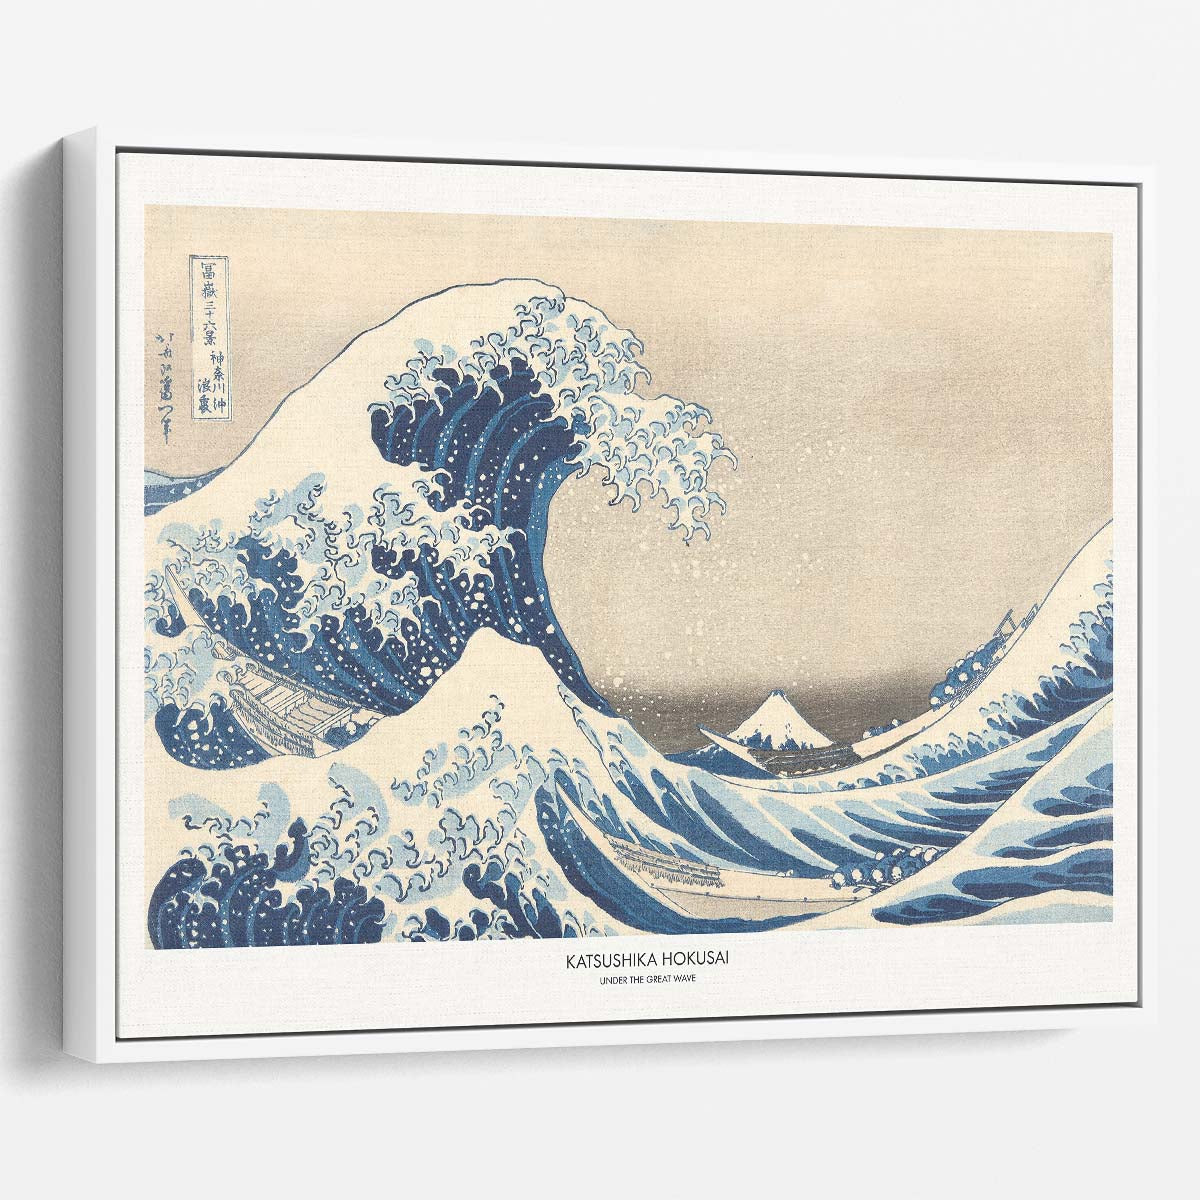 Katsushika Hokusai's Great Wave Japanese Ukiyo-e Masterpiece Wall Art